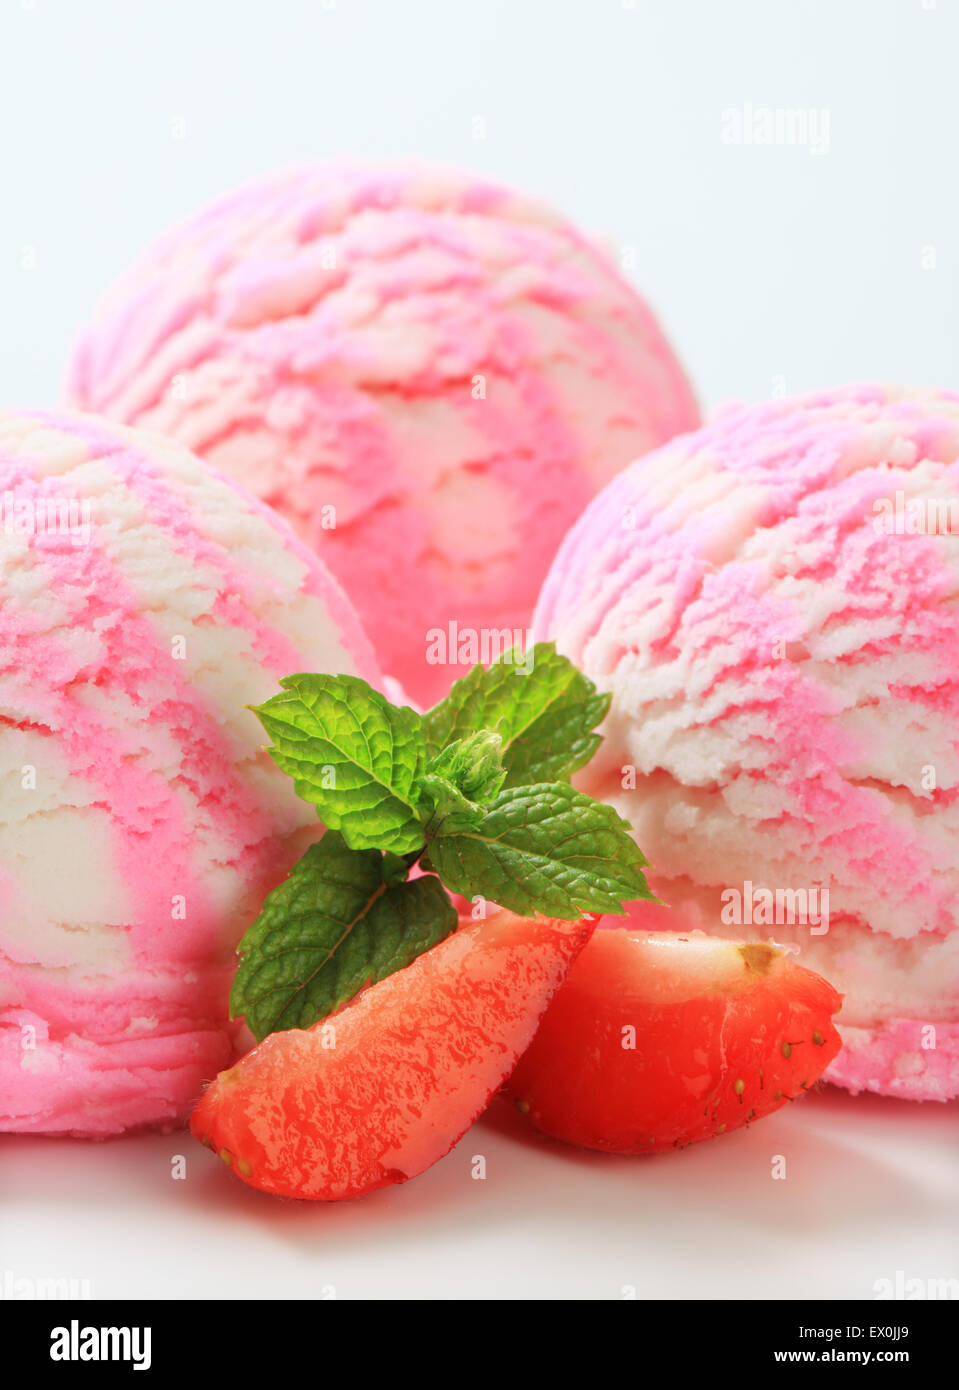 Scoops of ice cream with fresh strawberries Stock Photo